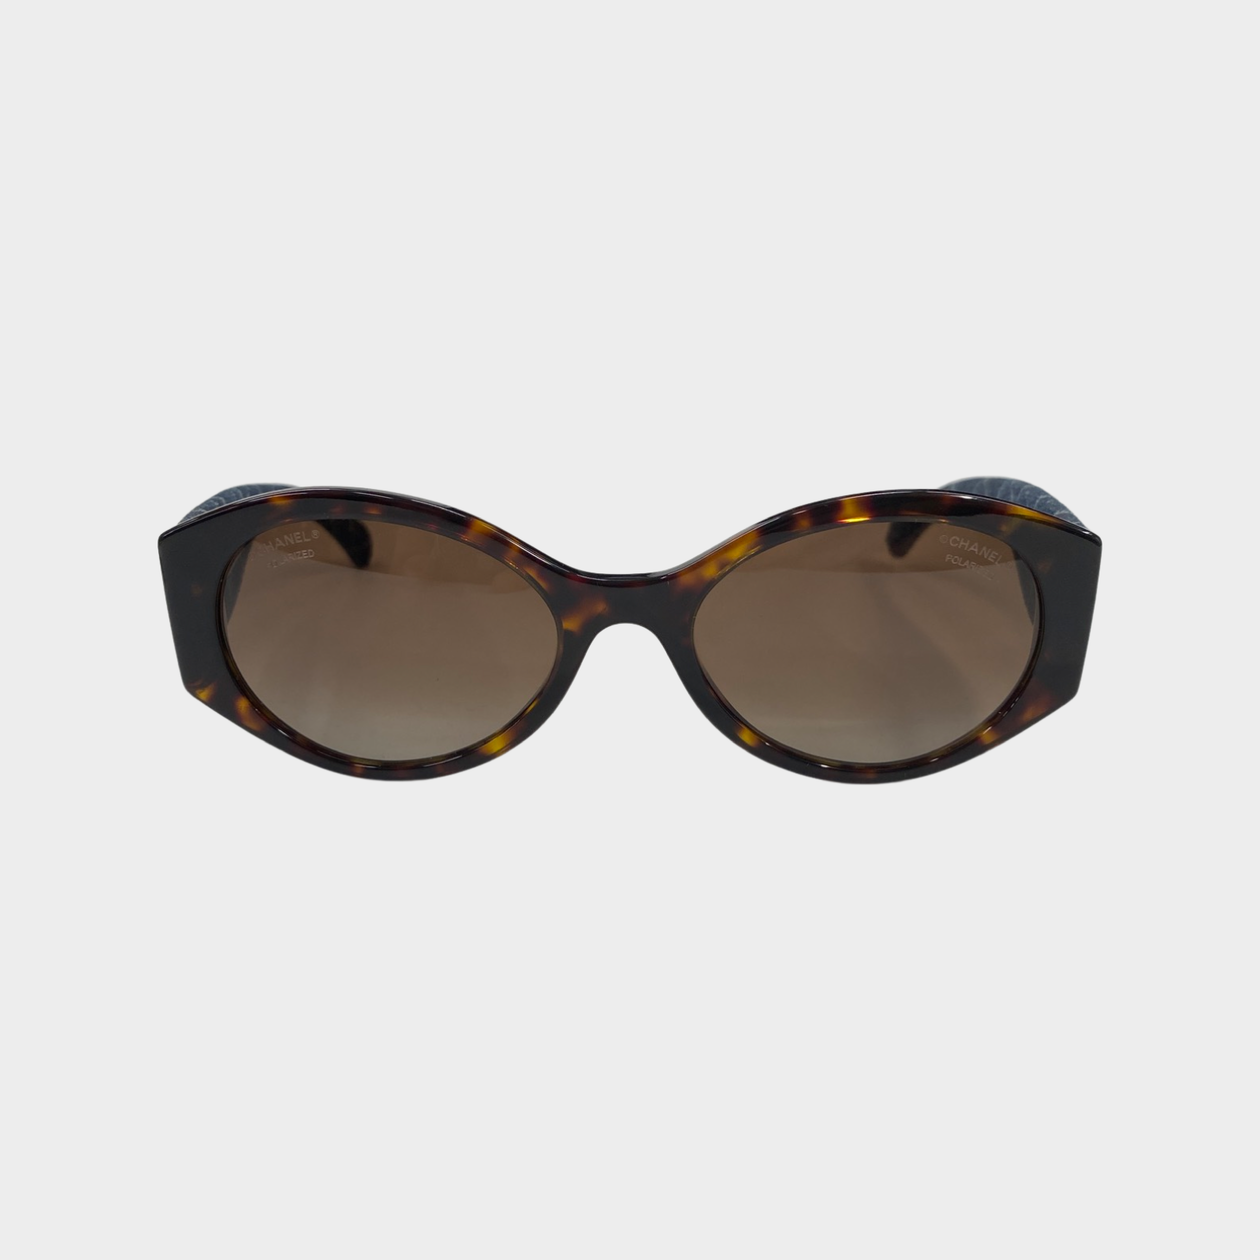 CHANEL Vintage Sunglasses Rare Oval Cateye Tortoise Brown 